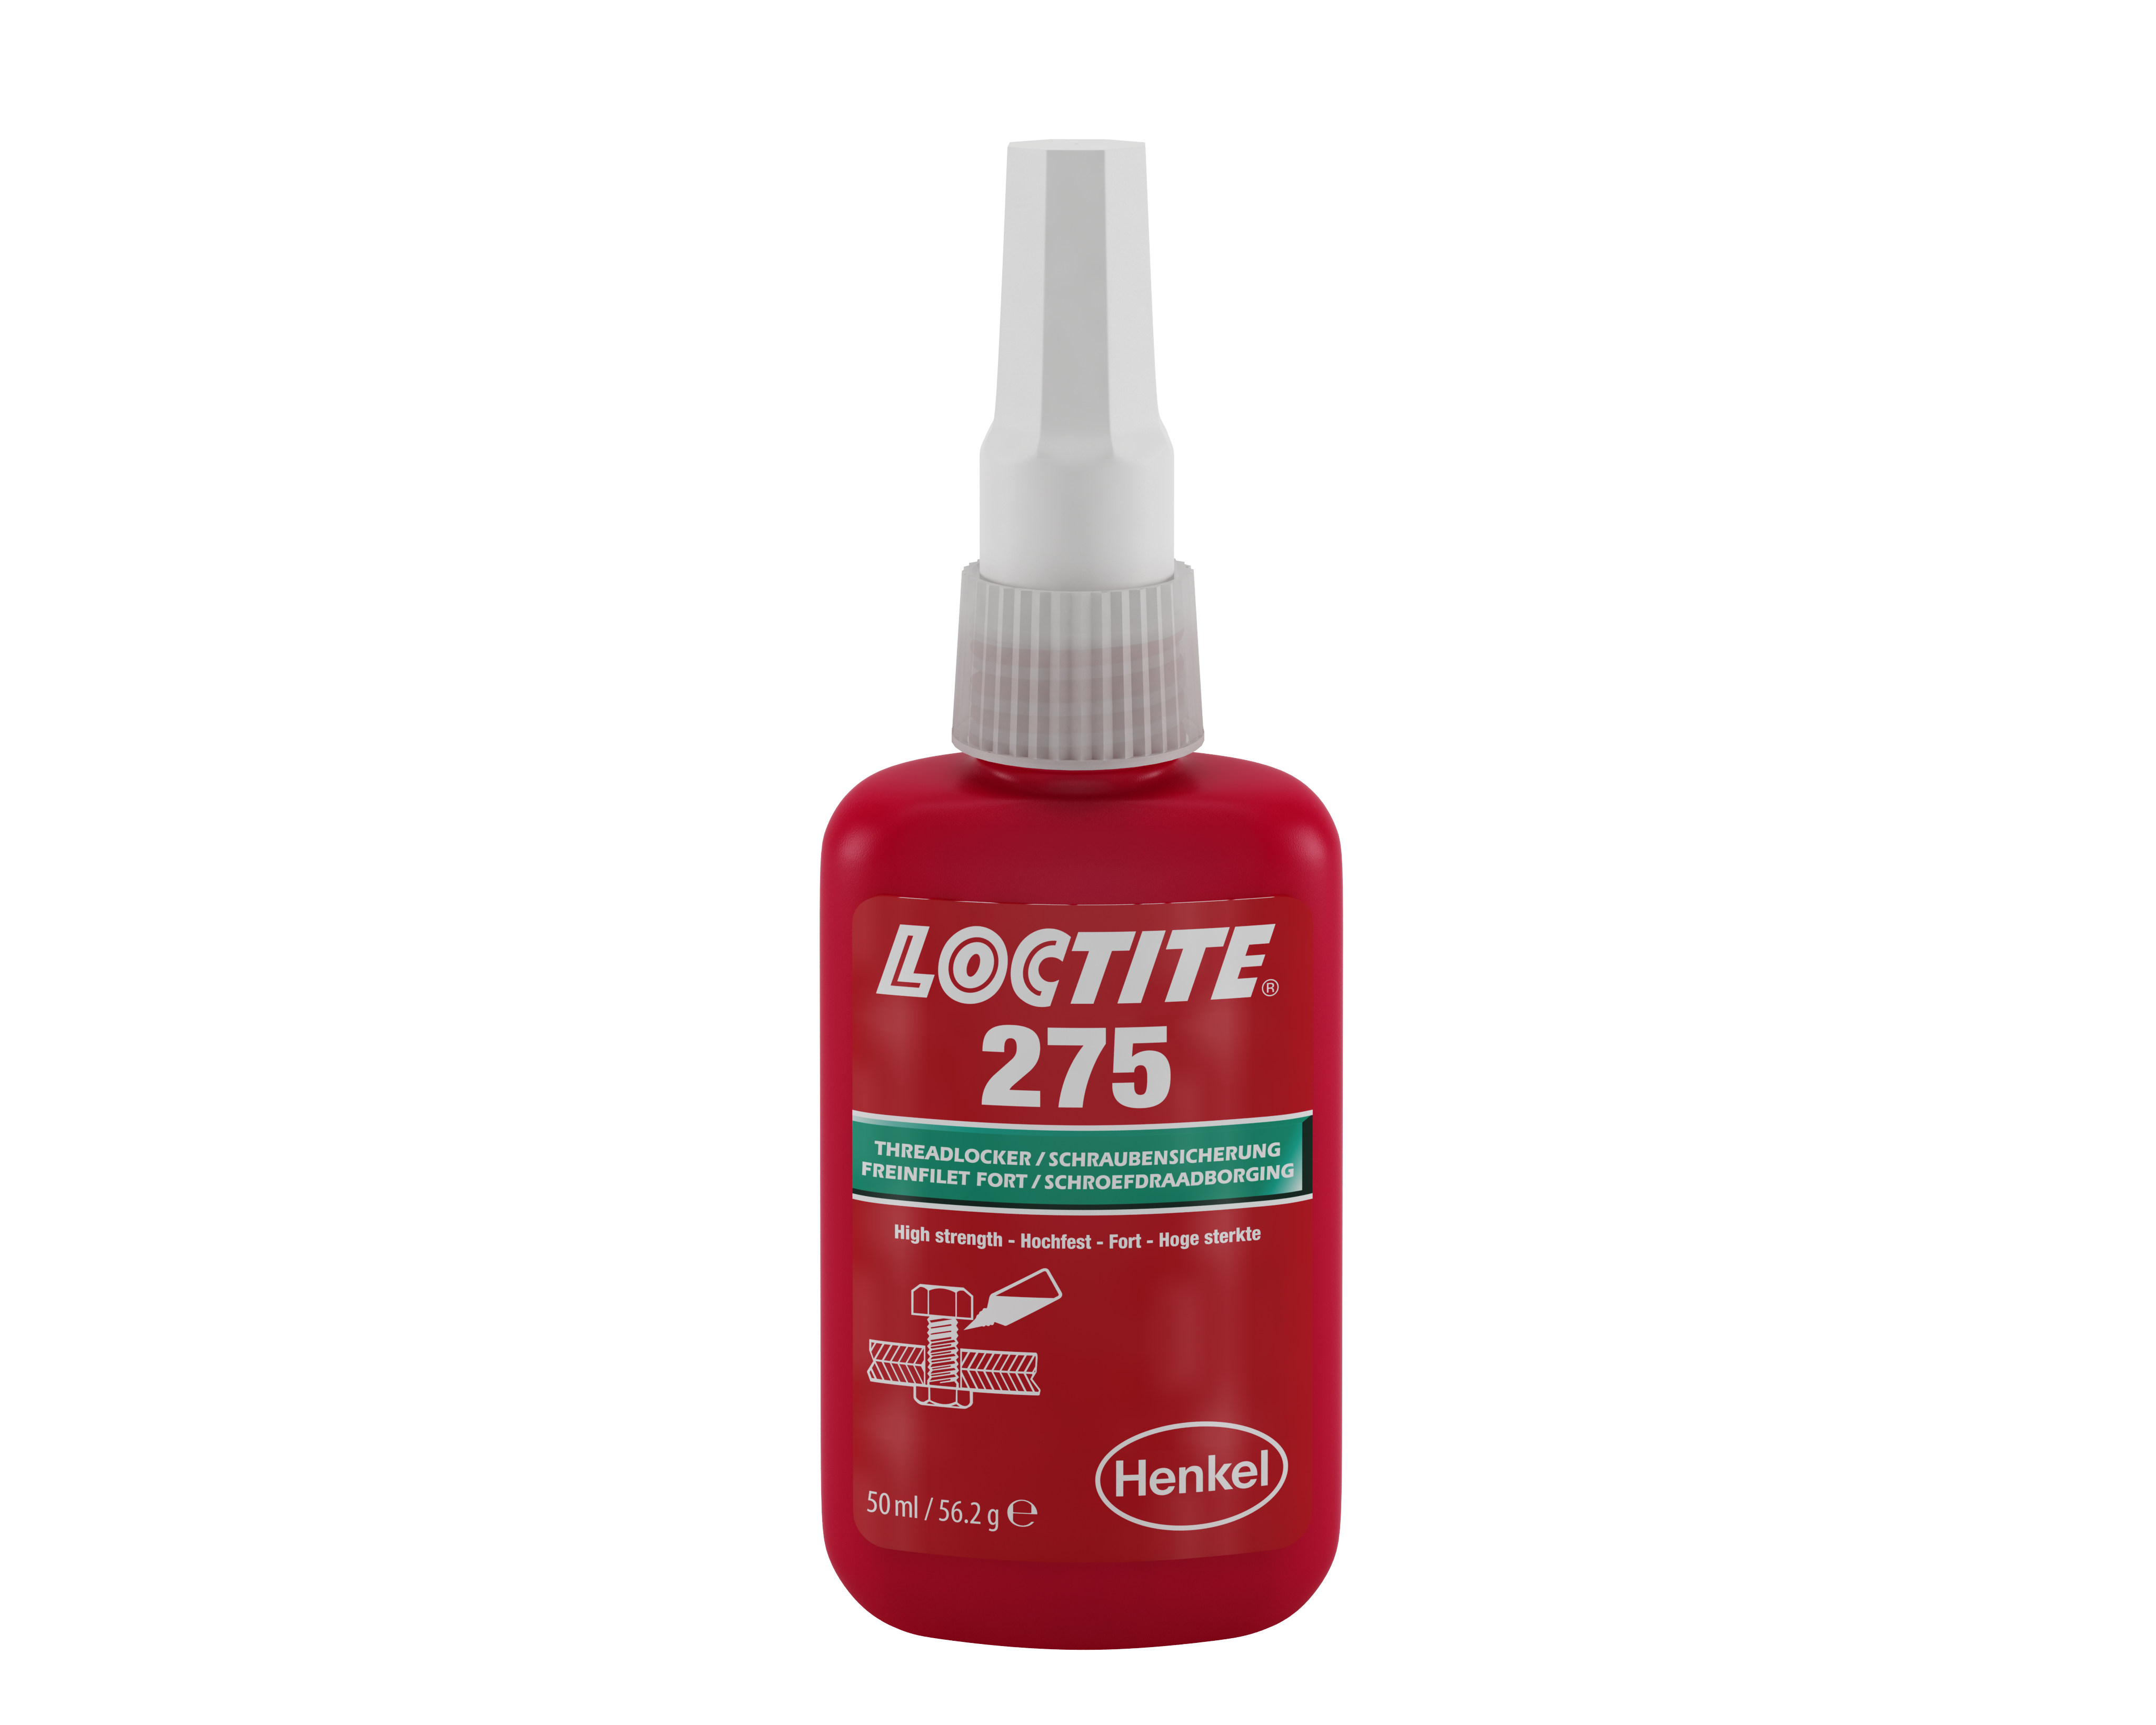 Loctite 275 x 250ml High Strength Threadlocking Adhesive